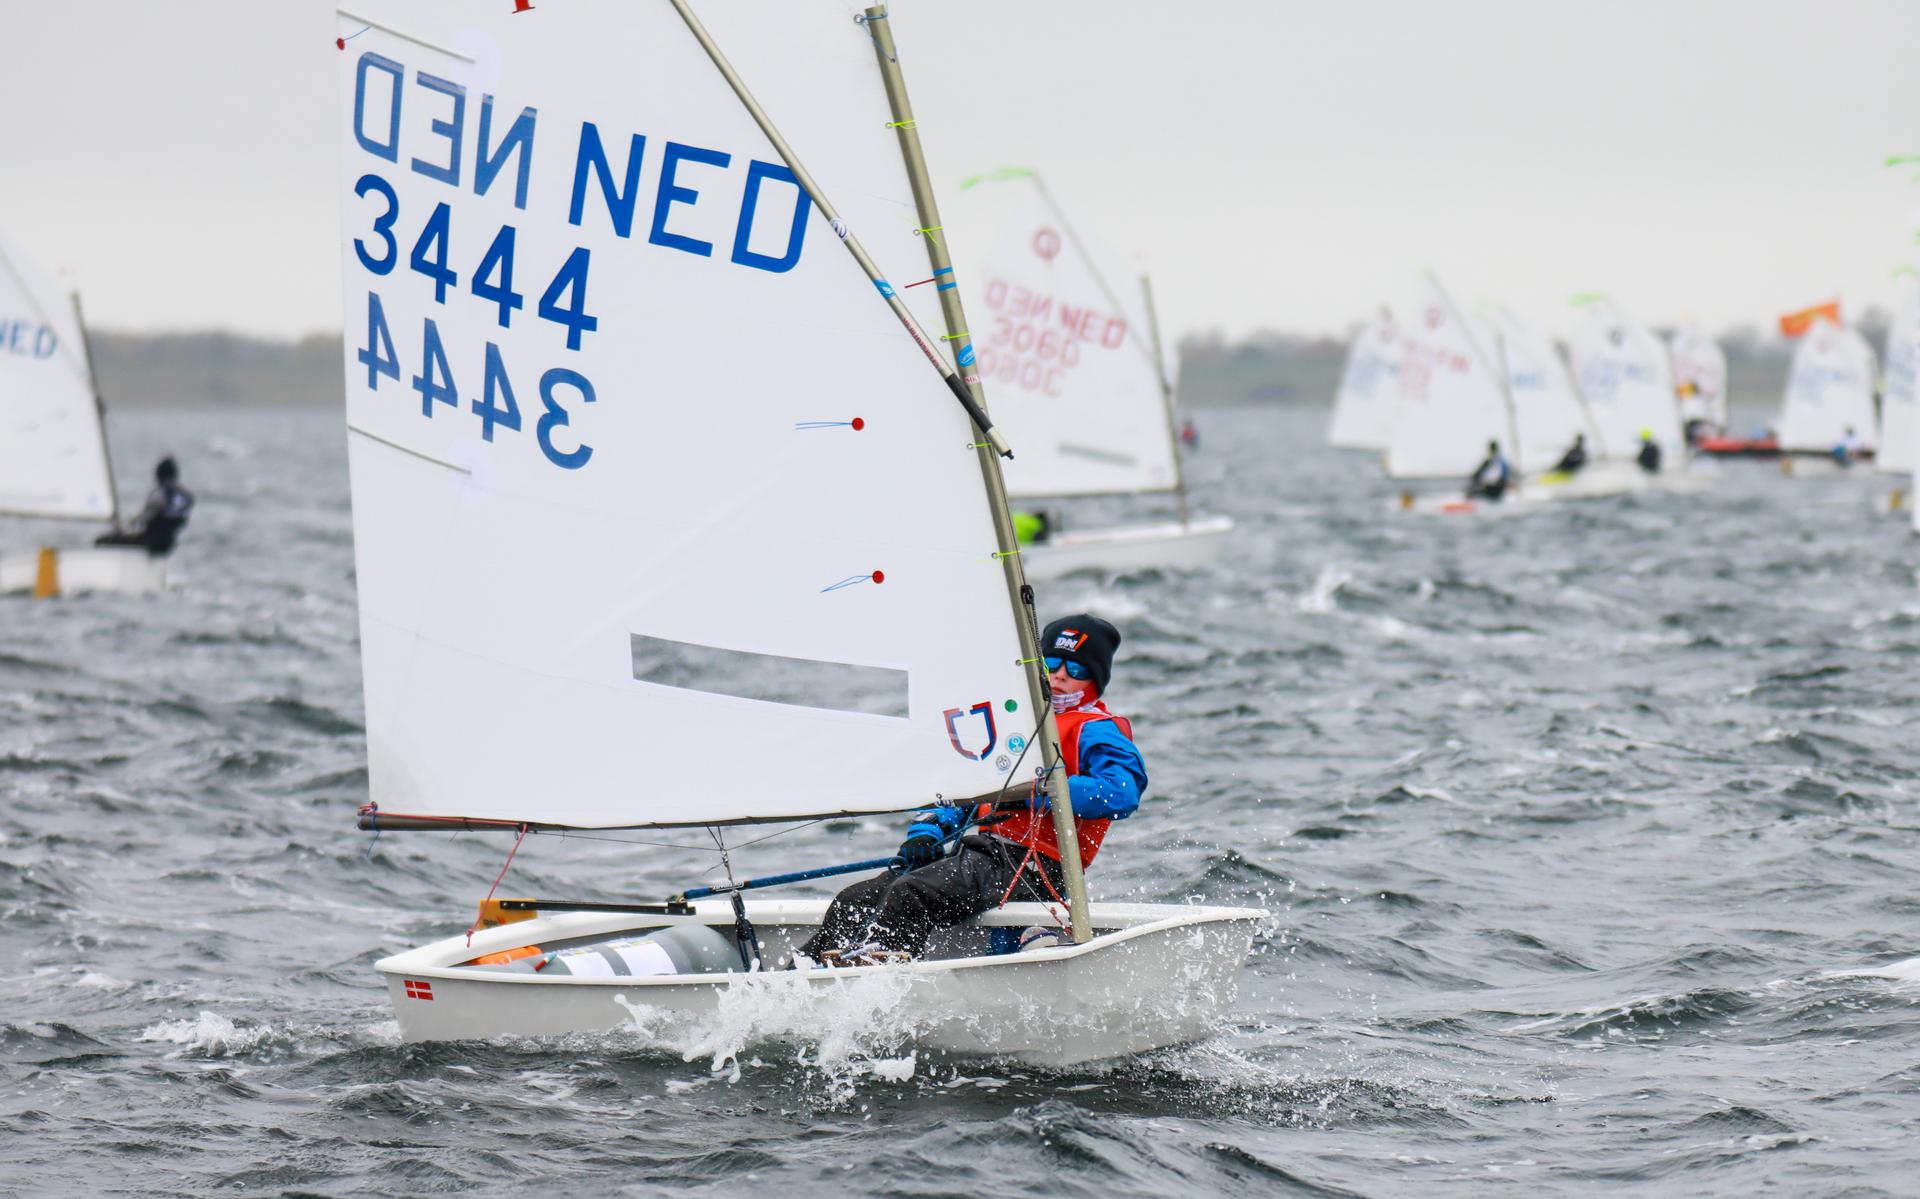 Ties de Ruiter (12) of Lelystad at the Optimist World Sailing Championships